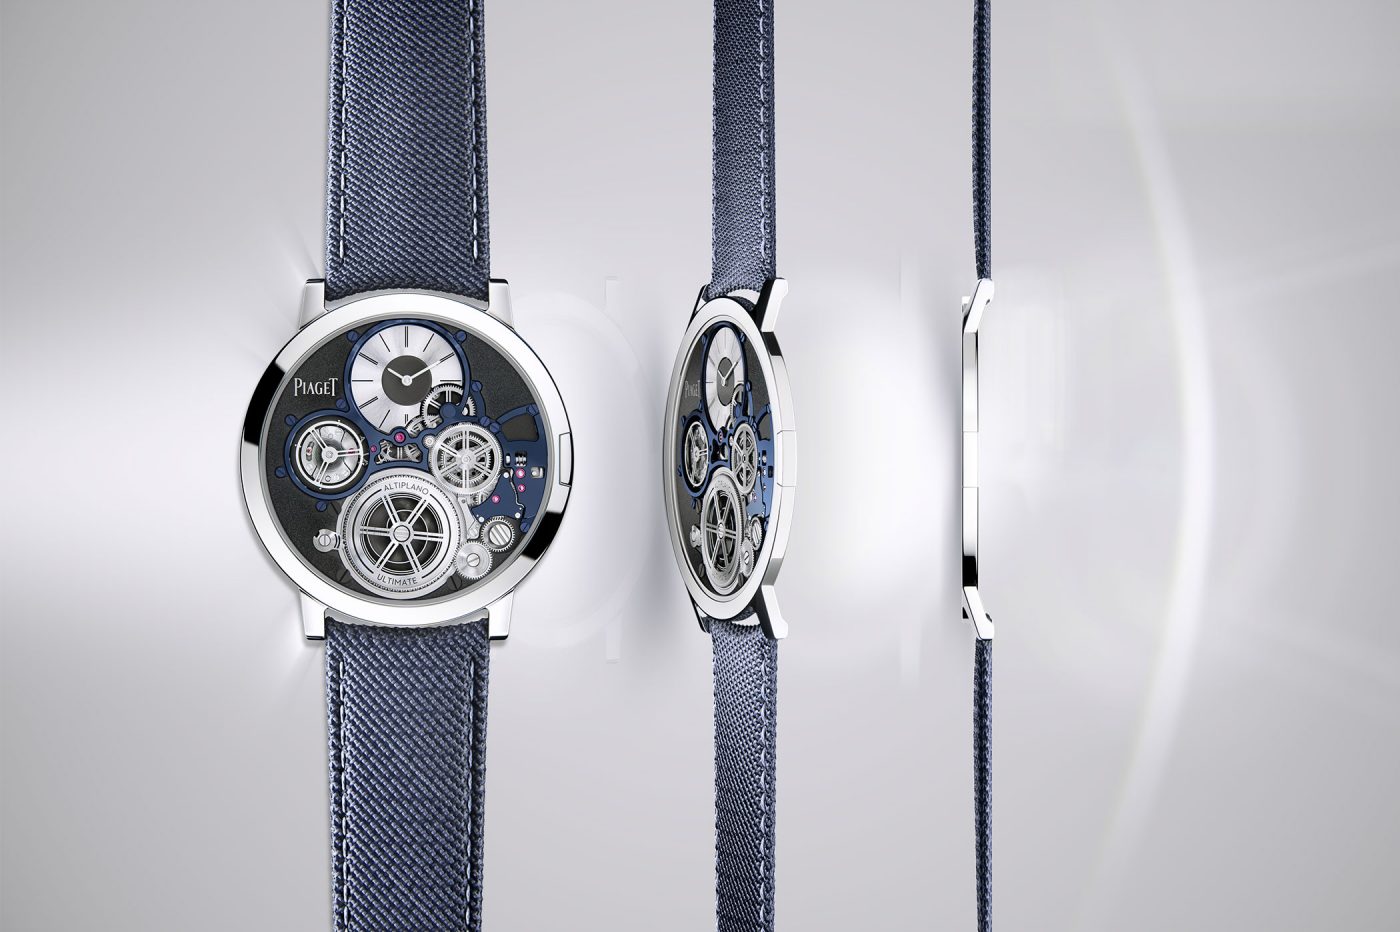 GPHG 2020 dla zegarka Piaget Altiplano Ultimate Concept